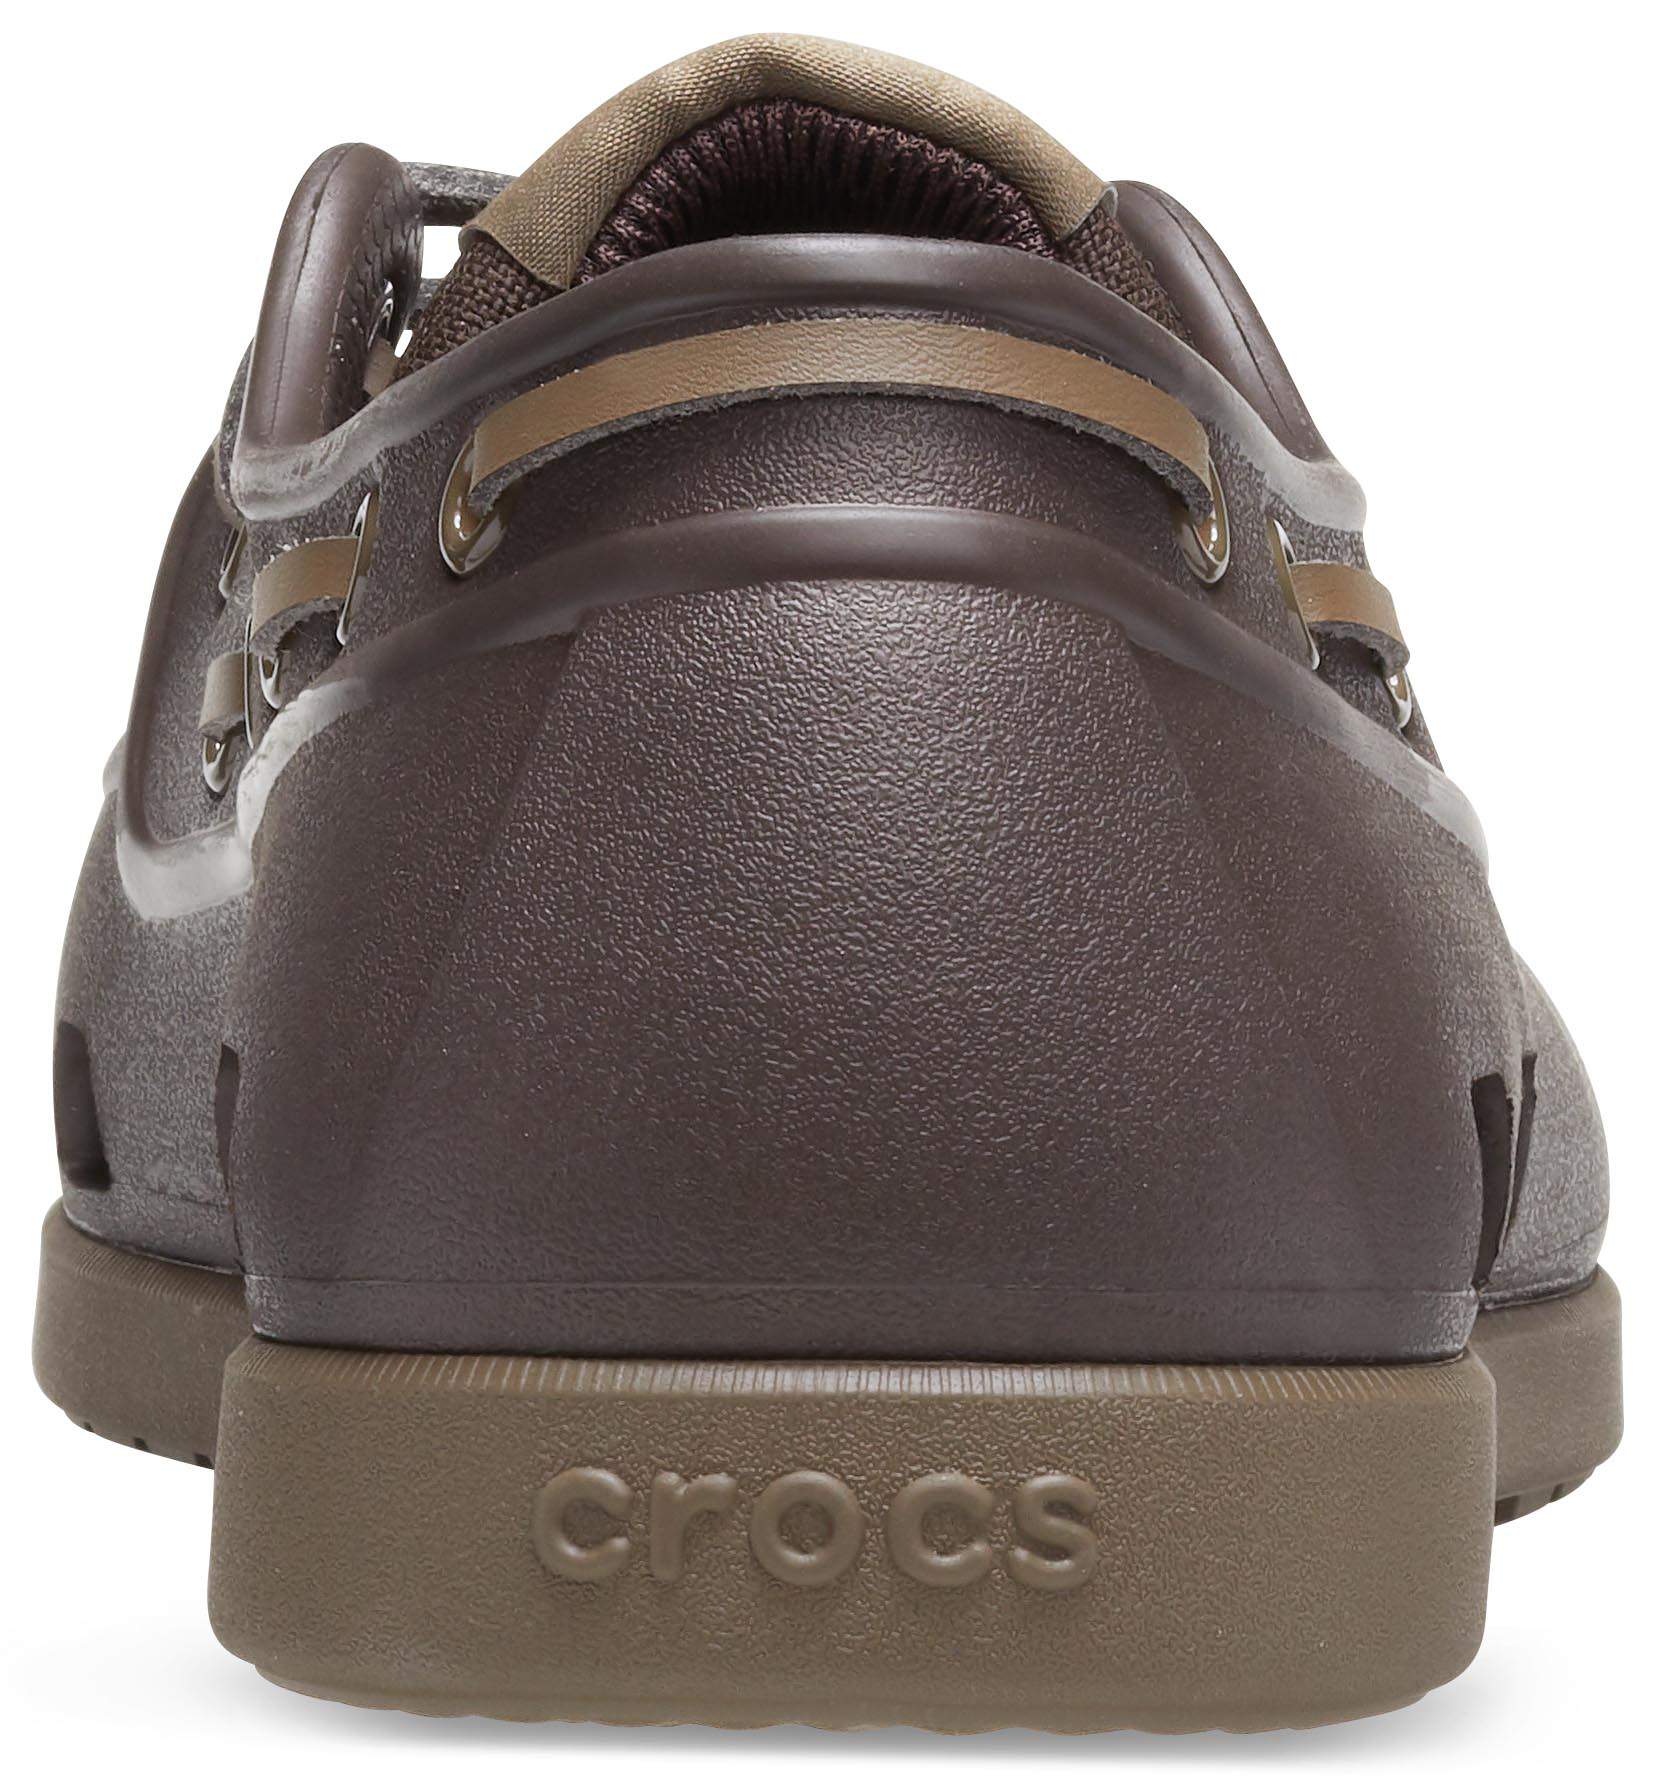 crocs men's classic boat shoe